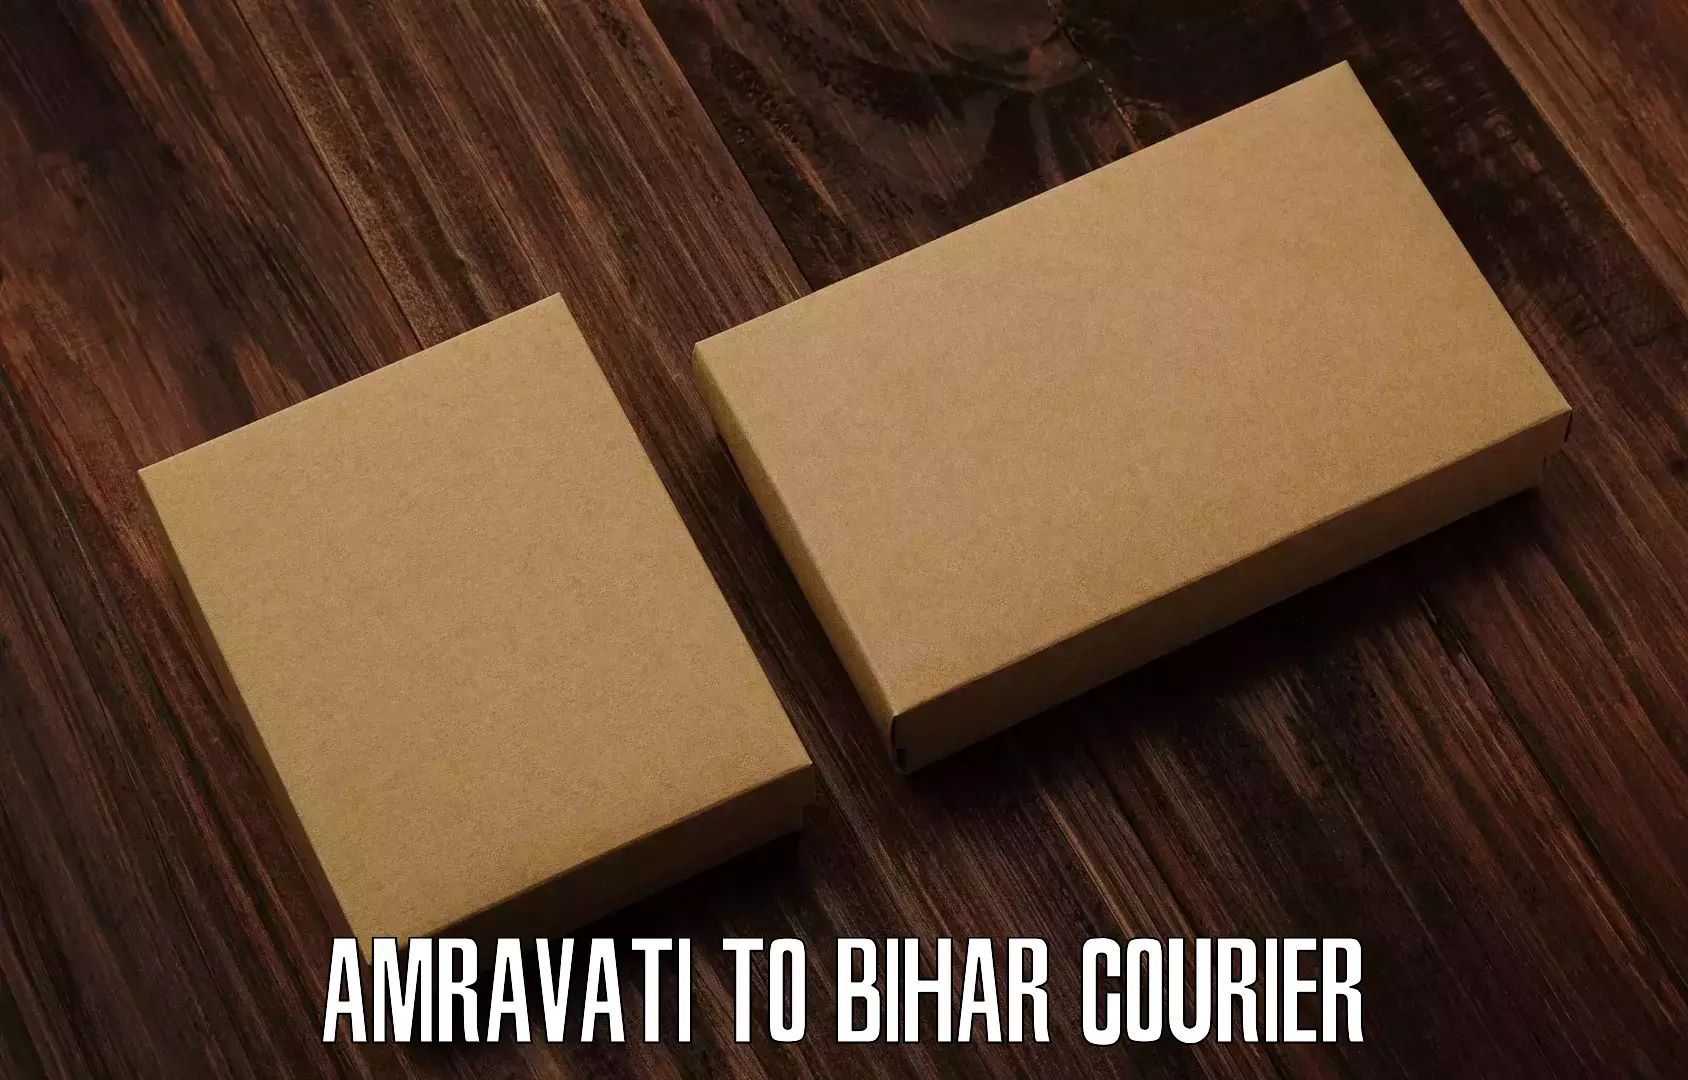 Express delivery network Amravati to Bihar